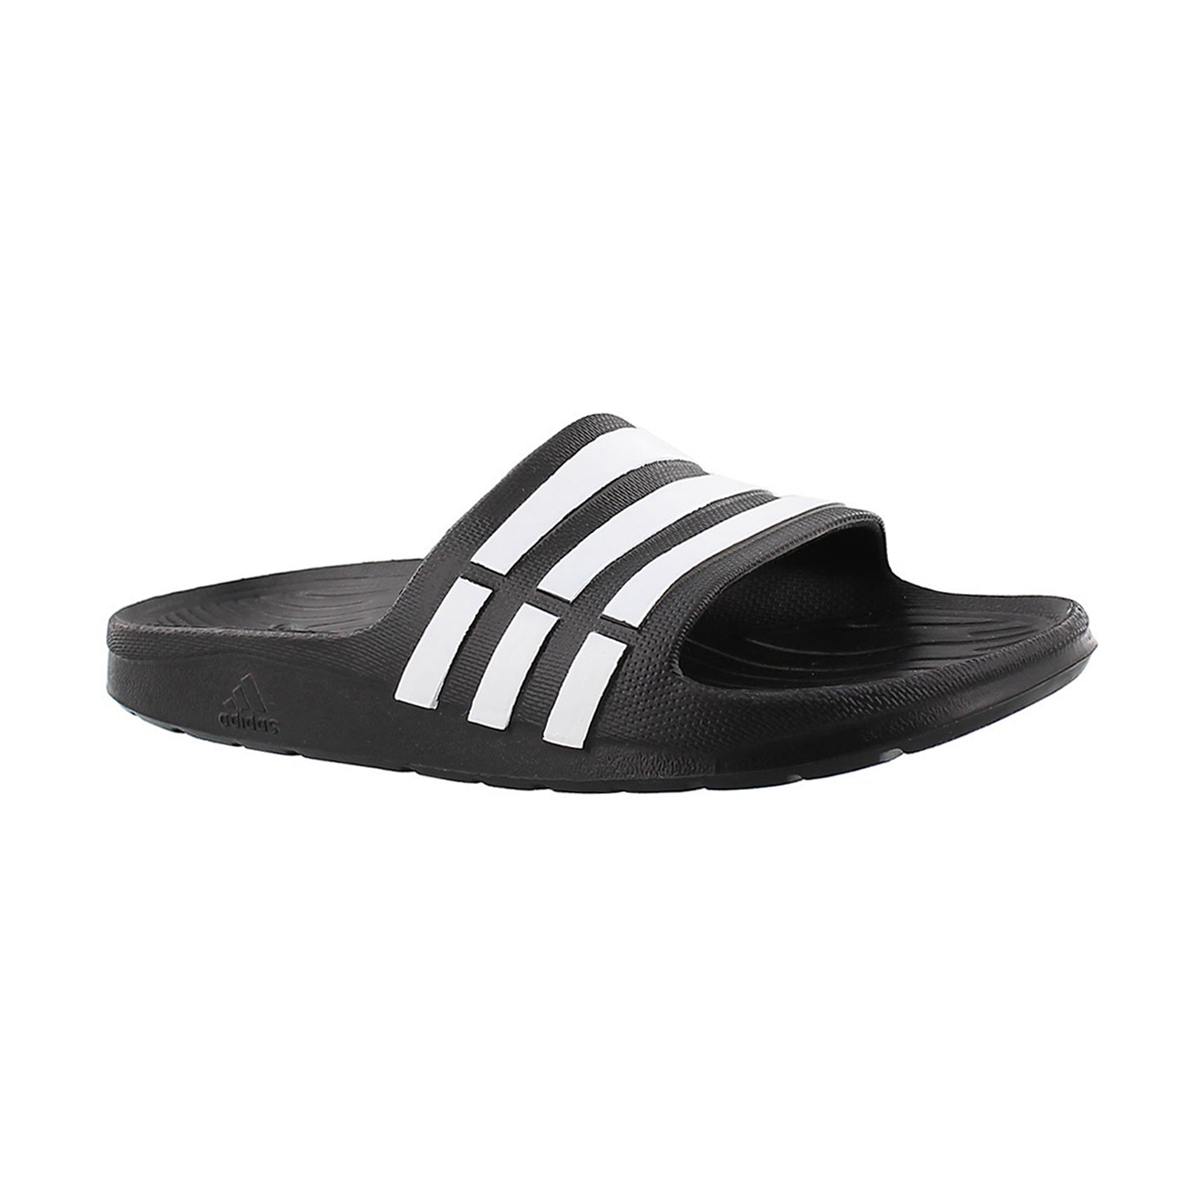 Adidas Boys' DURAMO SLIDE black sandals G06799